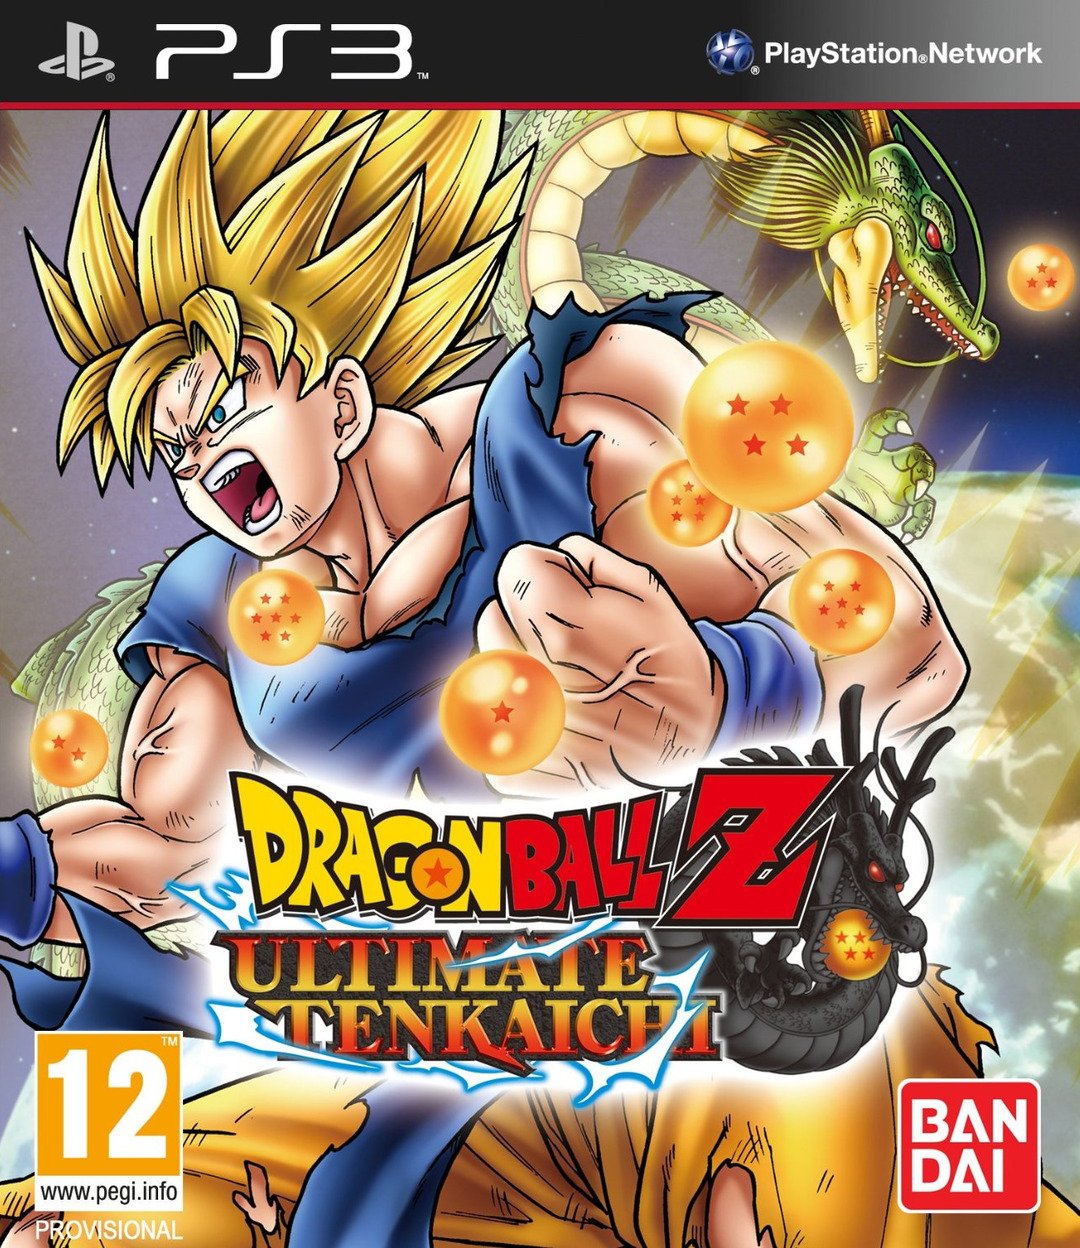 Caratula de Dragon Ball Z Ultimate Tenkaichi para PlayStation 3